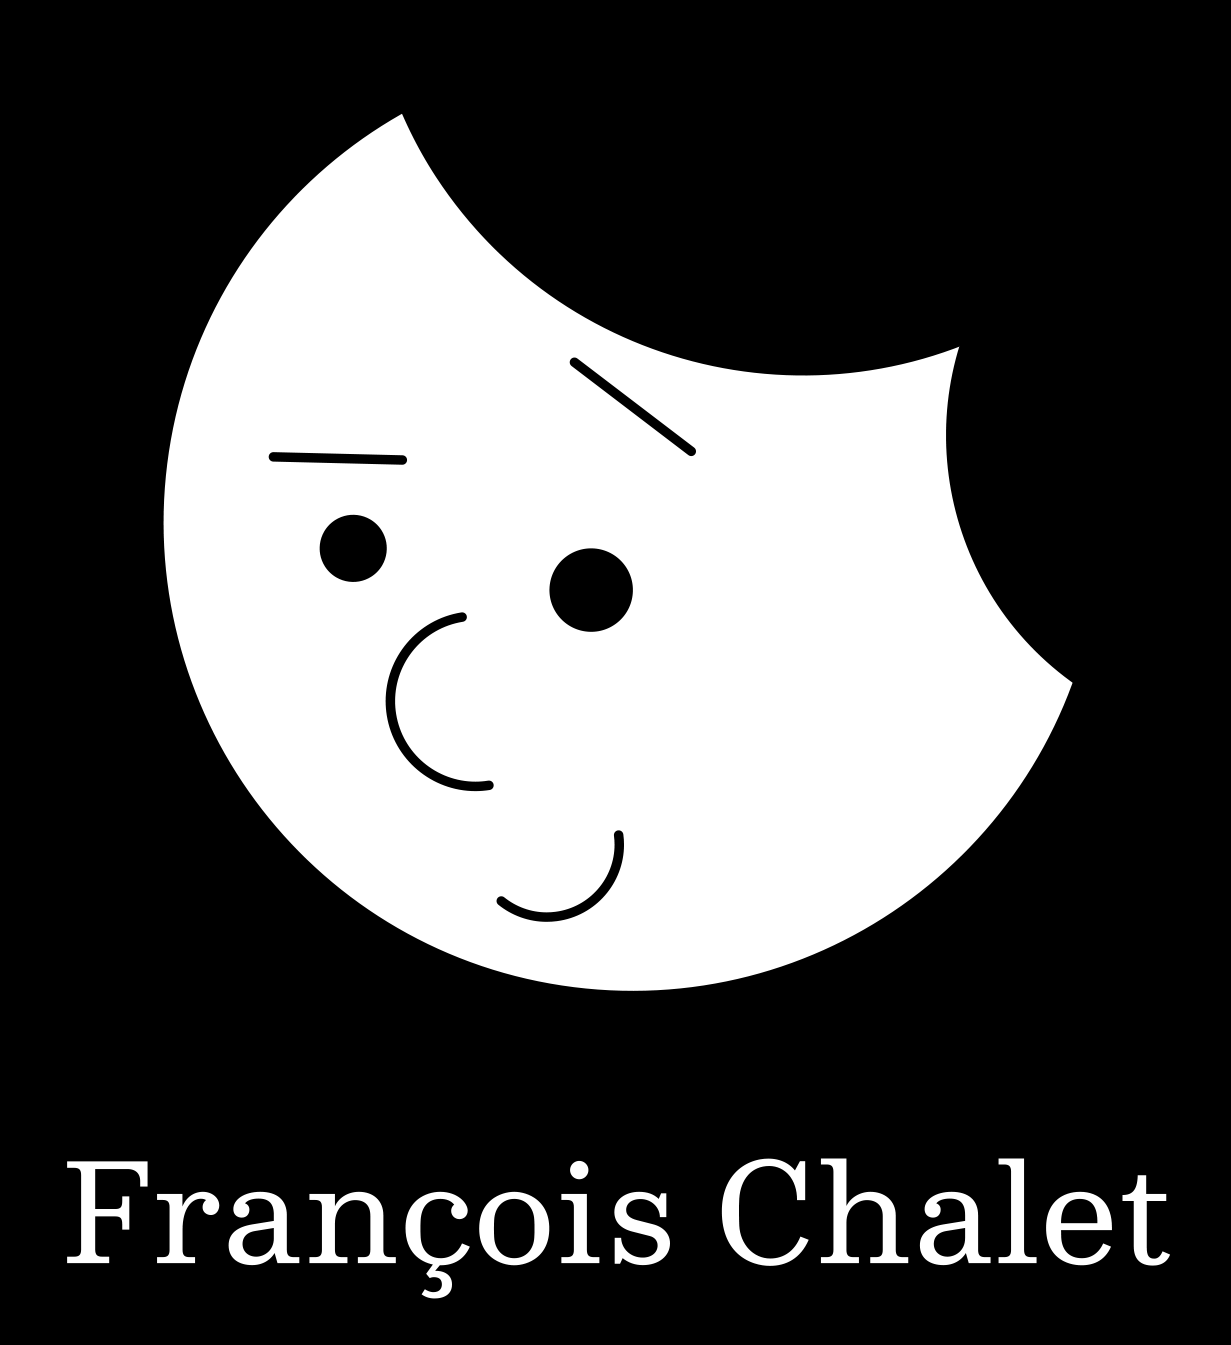 (c) Francoischalet.ch